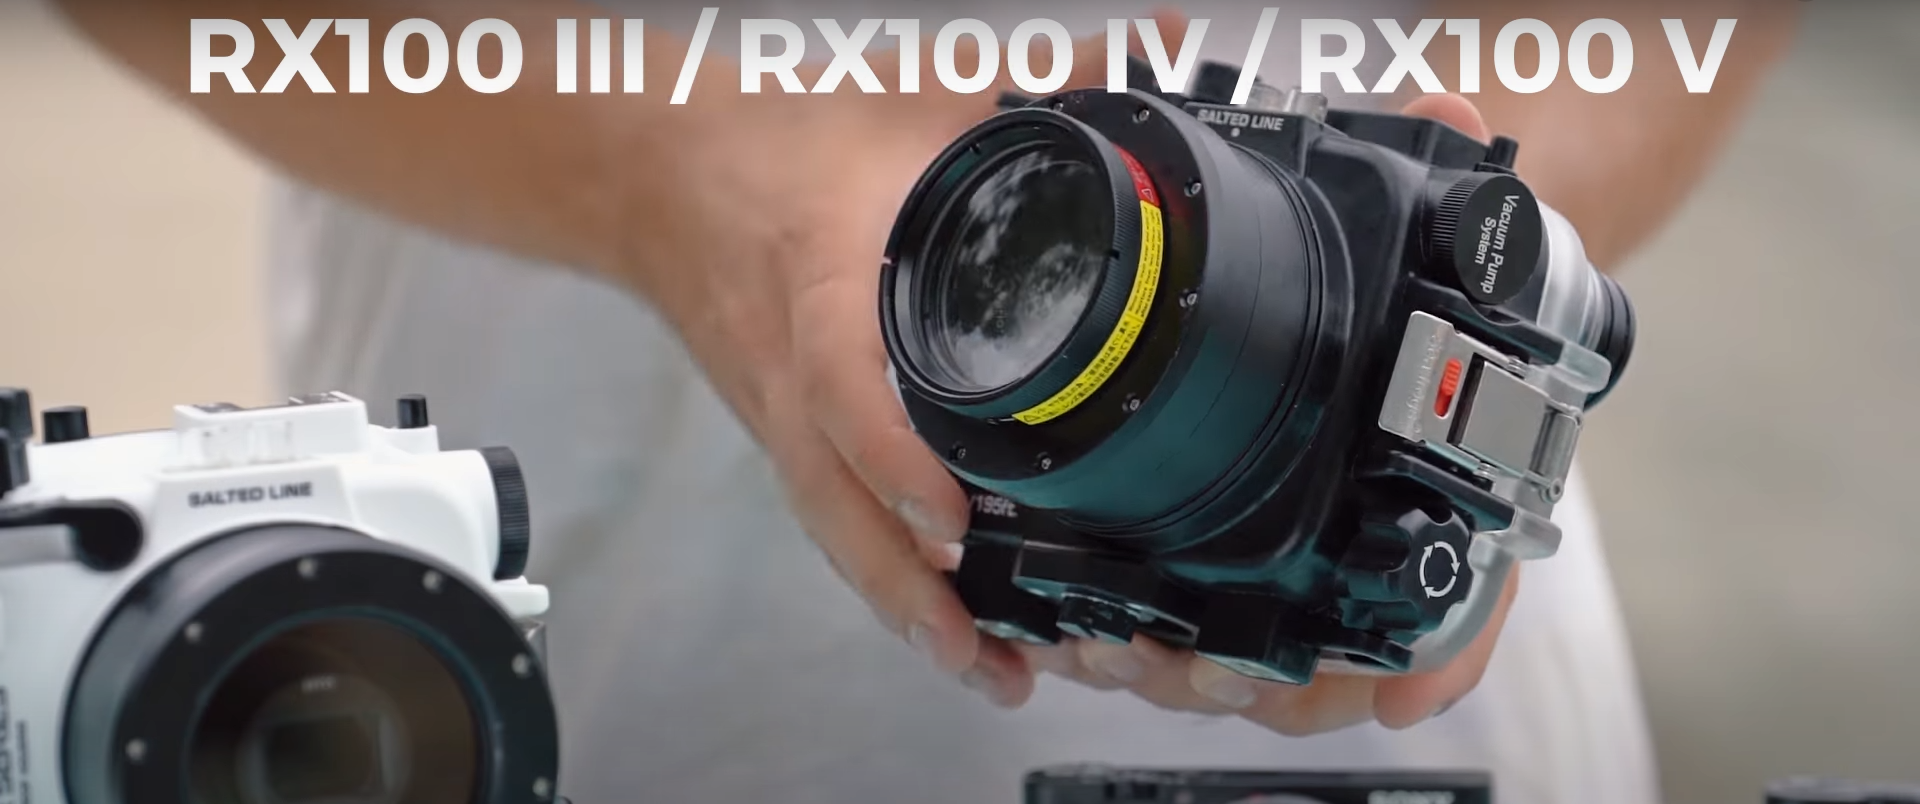 Load video: SONY RX1xx series SALTED LINE Waterproof Camera Housing